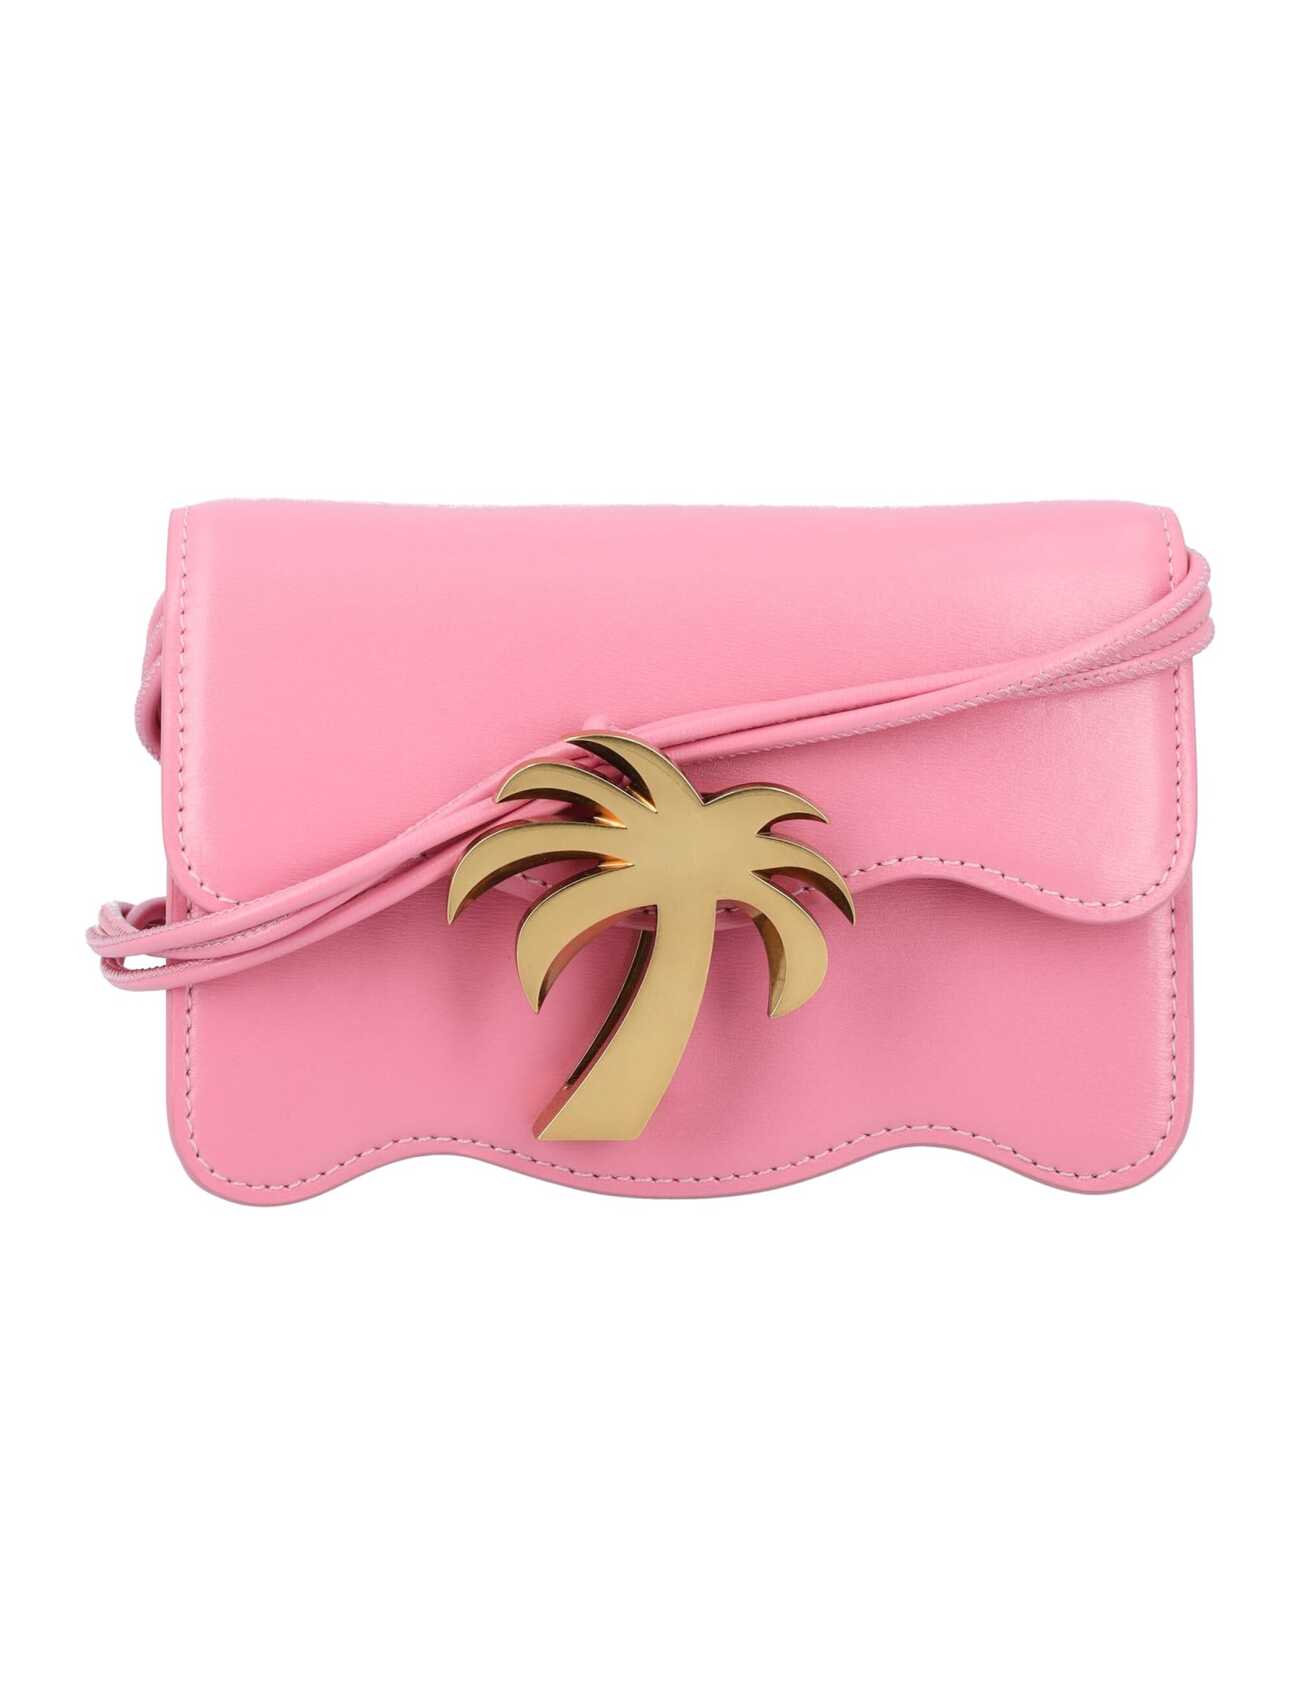 Palm Angels Mini Palm Beach Bag in pink